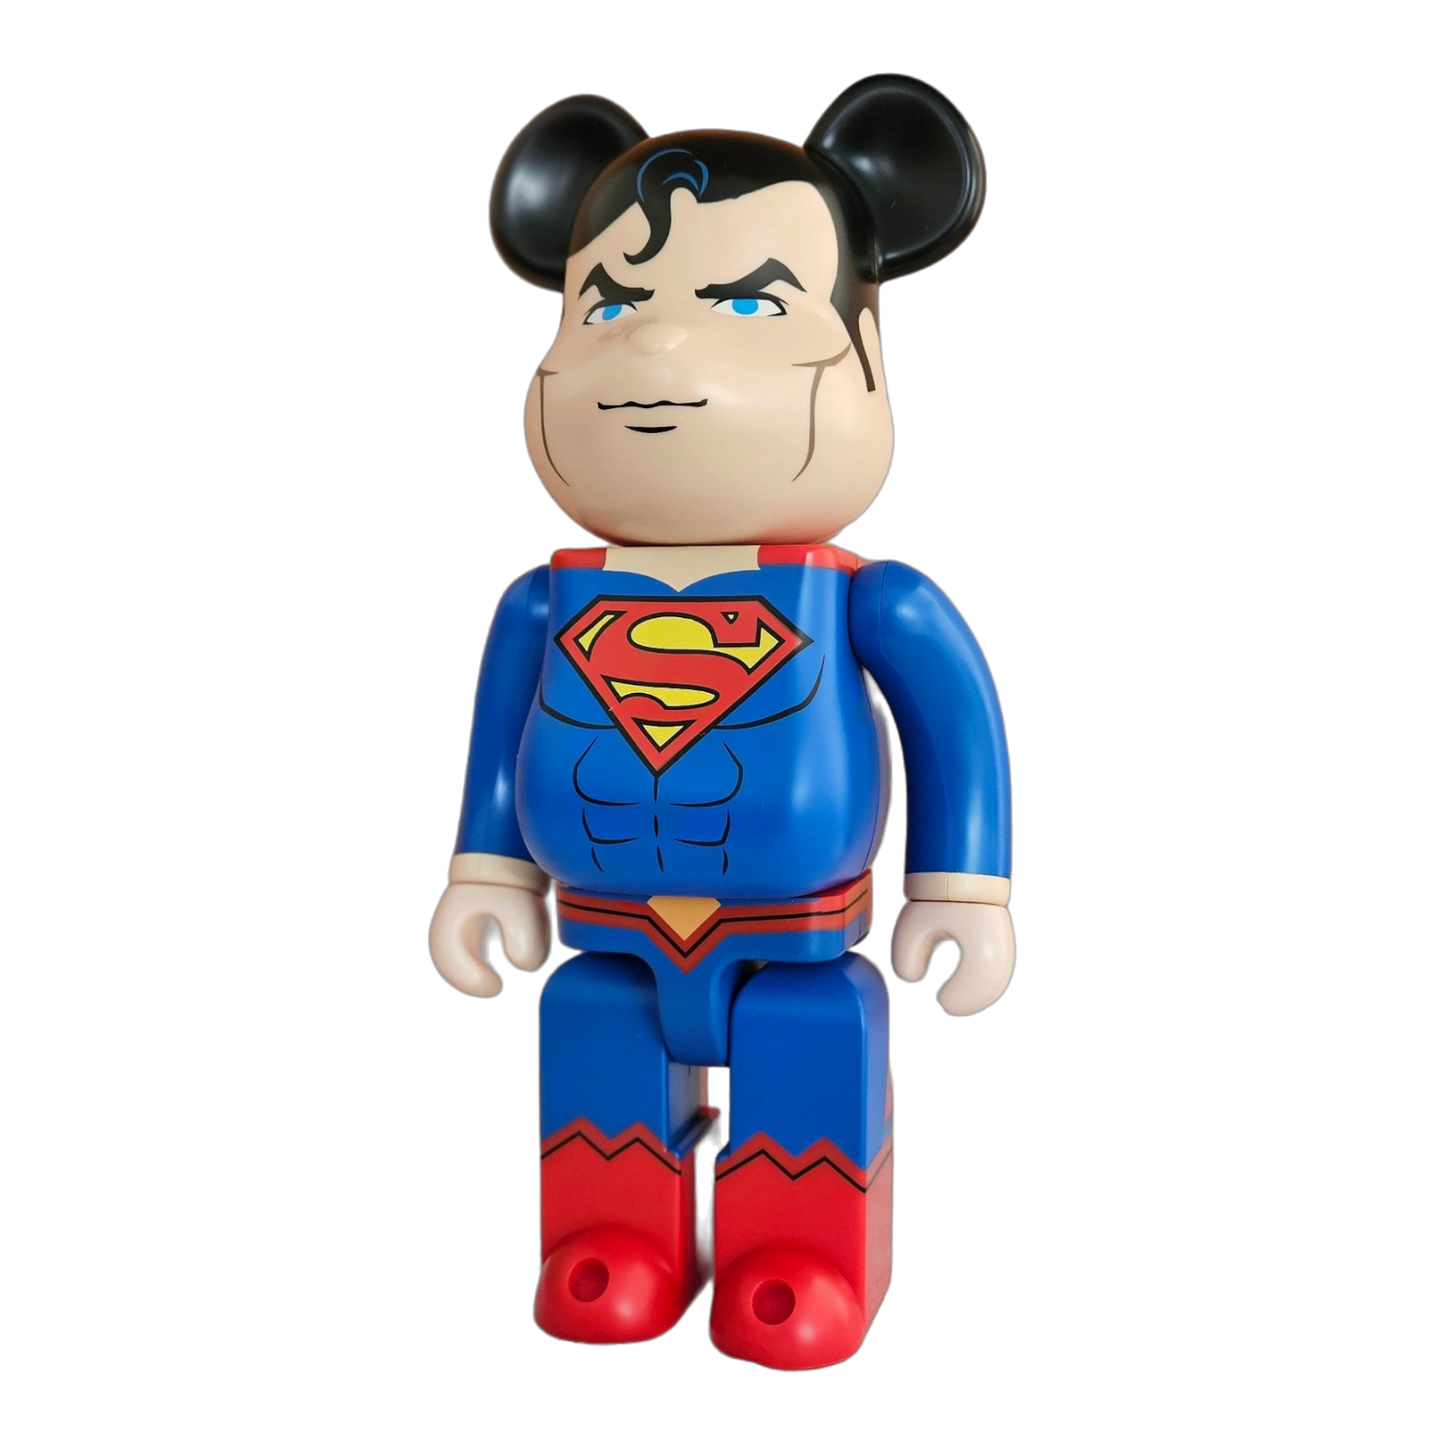 BE@RBRICK SP - Superman (400%)